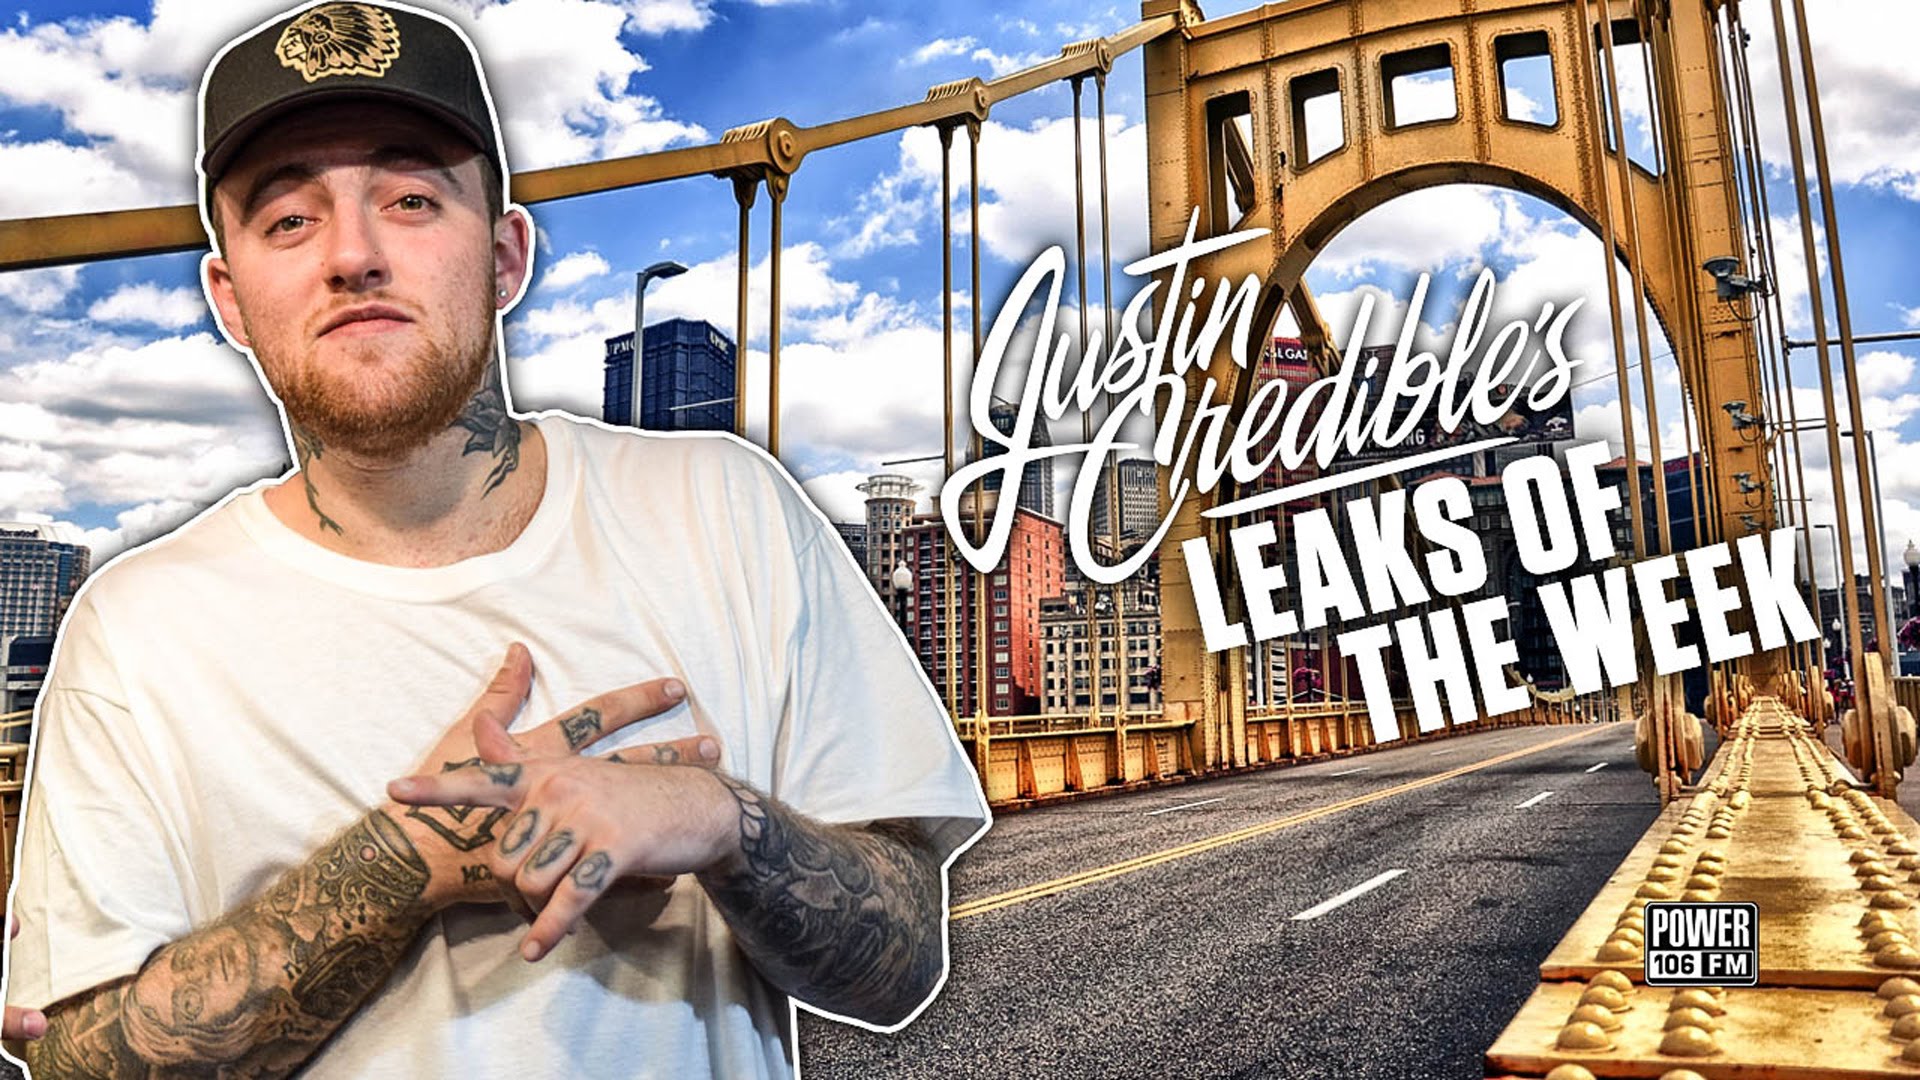 Justin Credible’s #LeaksOfTheWeek w/ DJ Khaled, Joe Moses, & Mac Miller (Video)